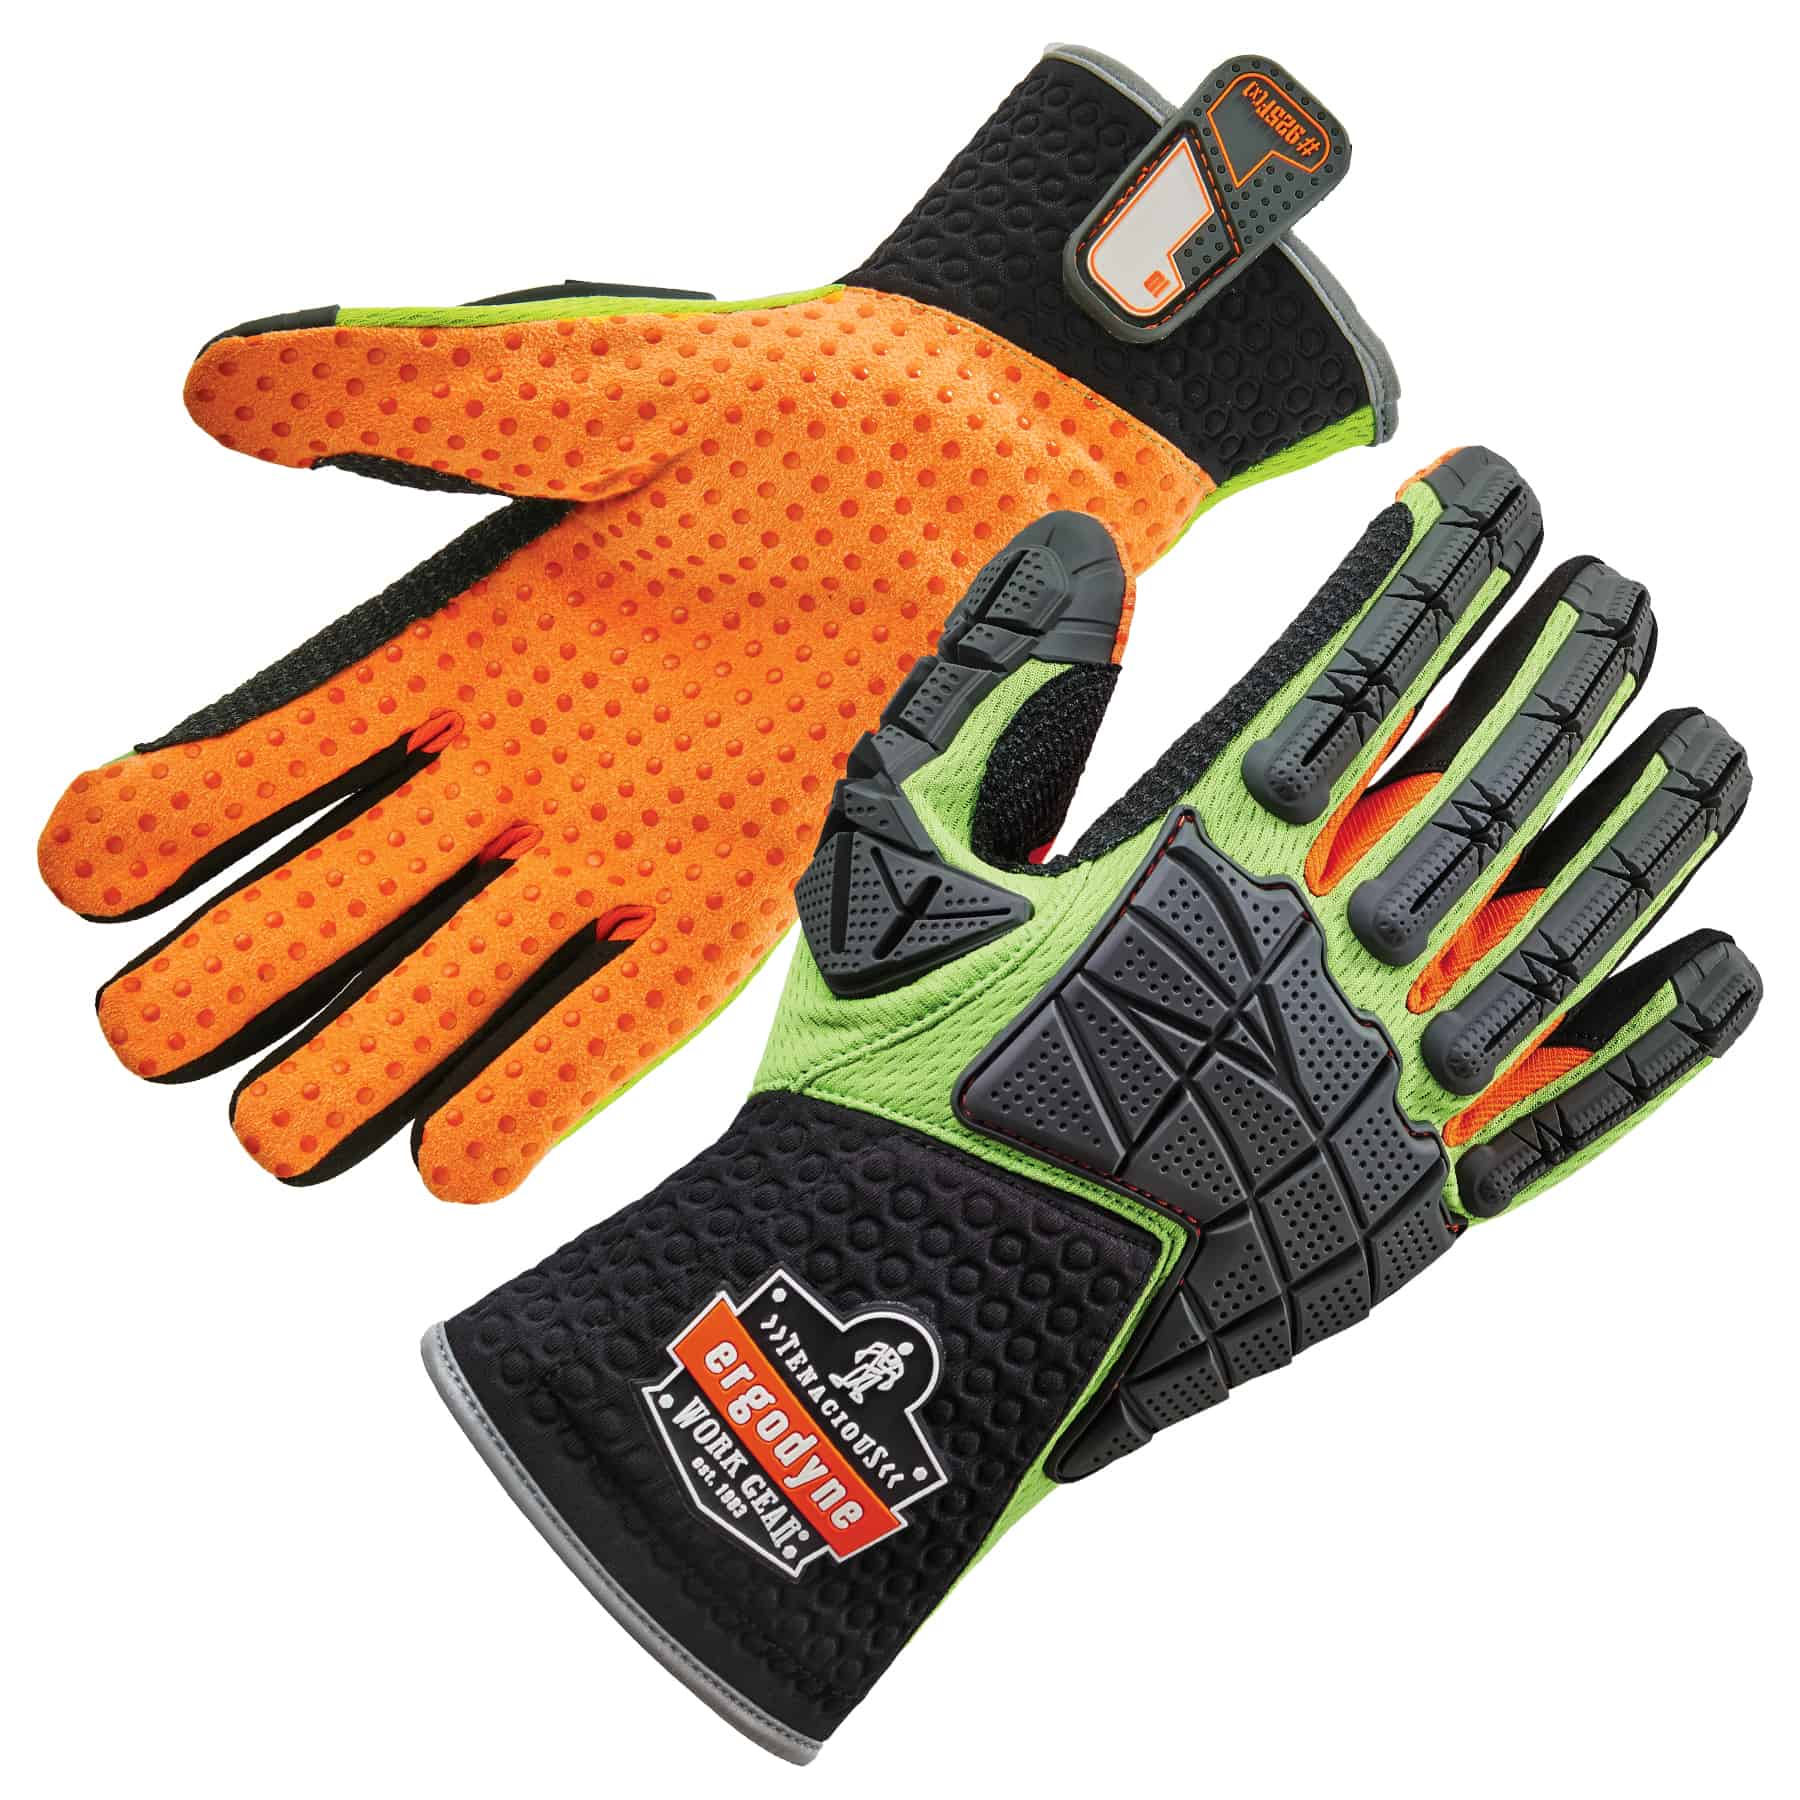 https://www.ergodyne.com/sites/default/files/product-images/17902-925fx-standard-dorsal-impact-reducing-gloves-paired.jpg